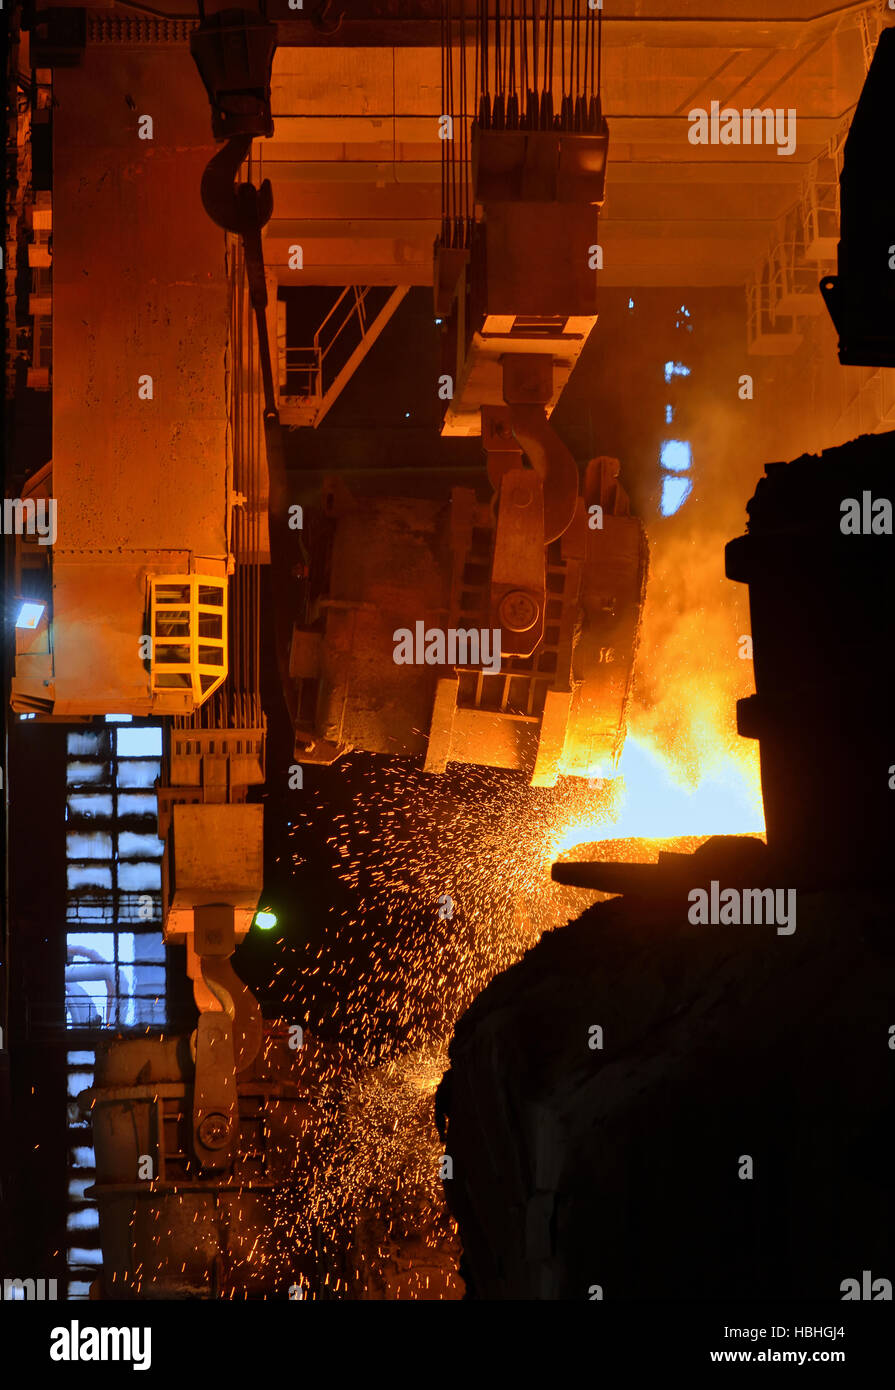 steel mills converter filling hot materials Stock Photo